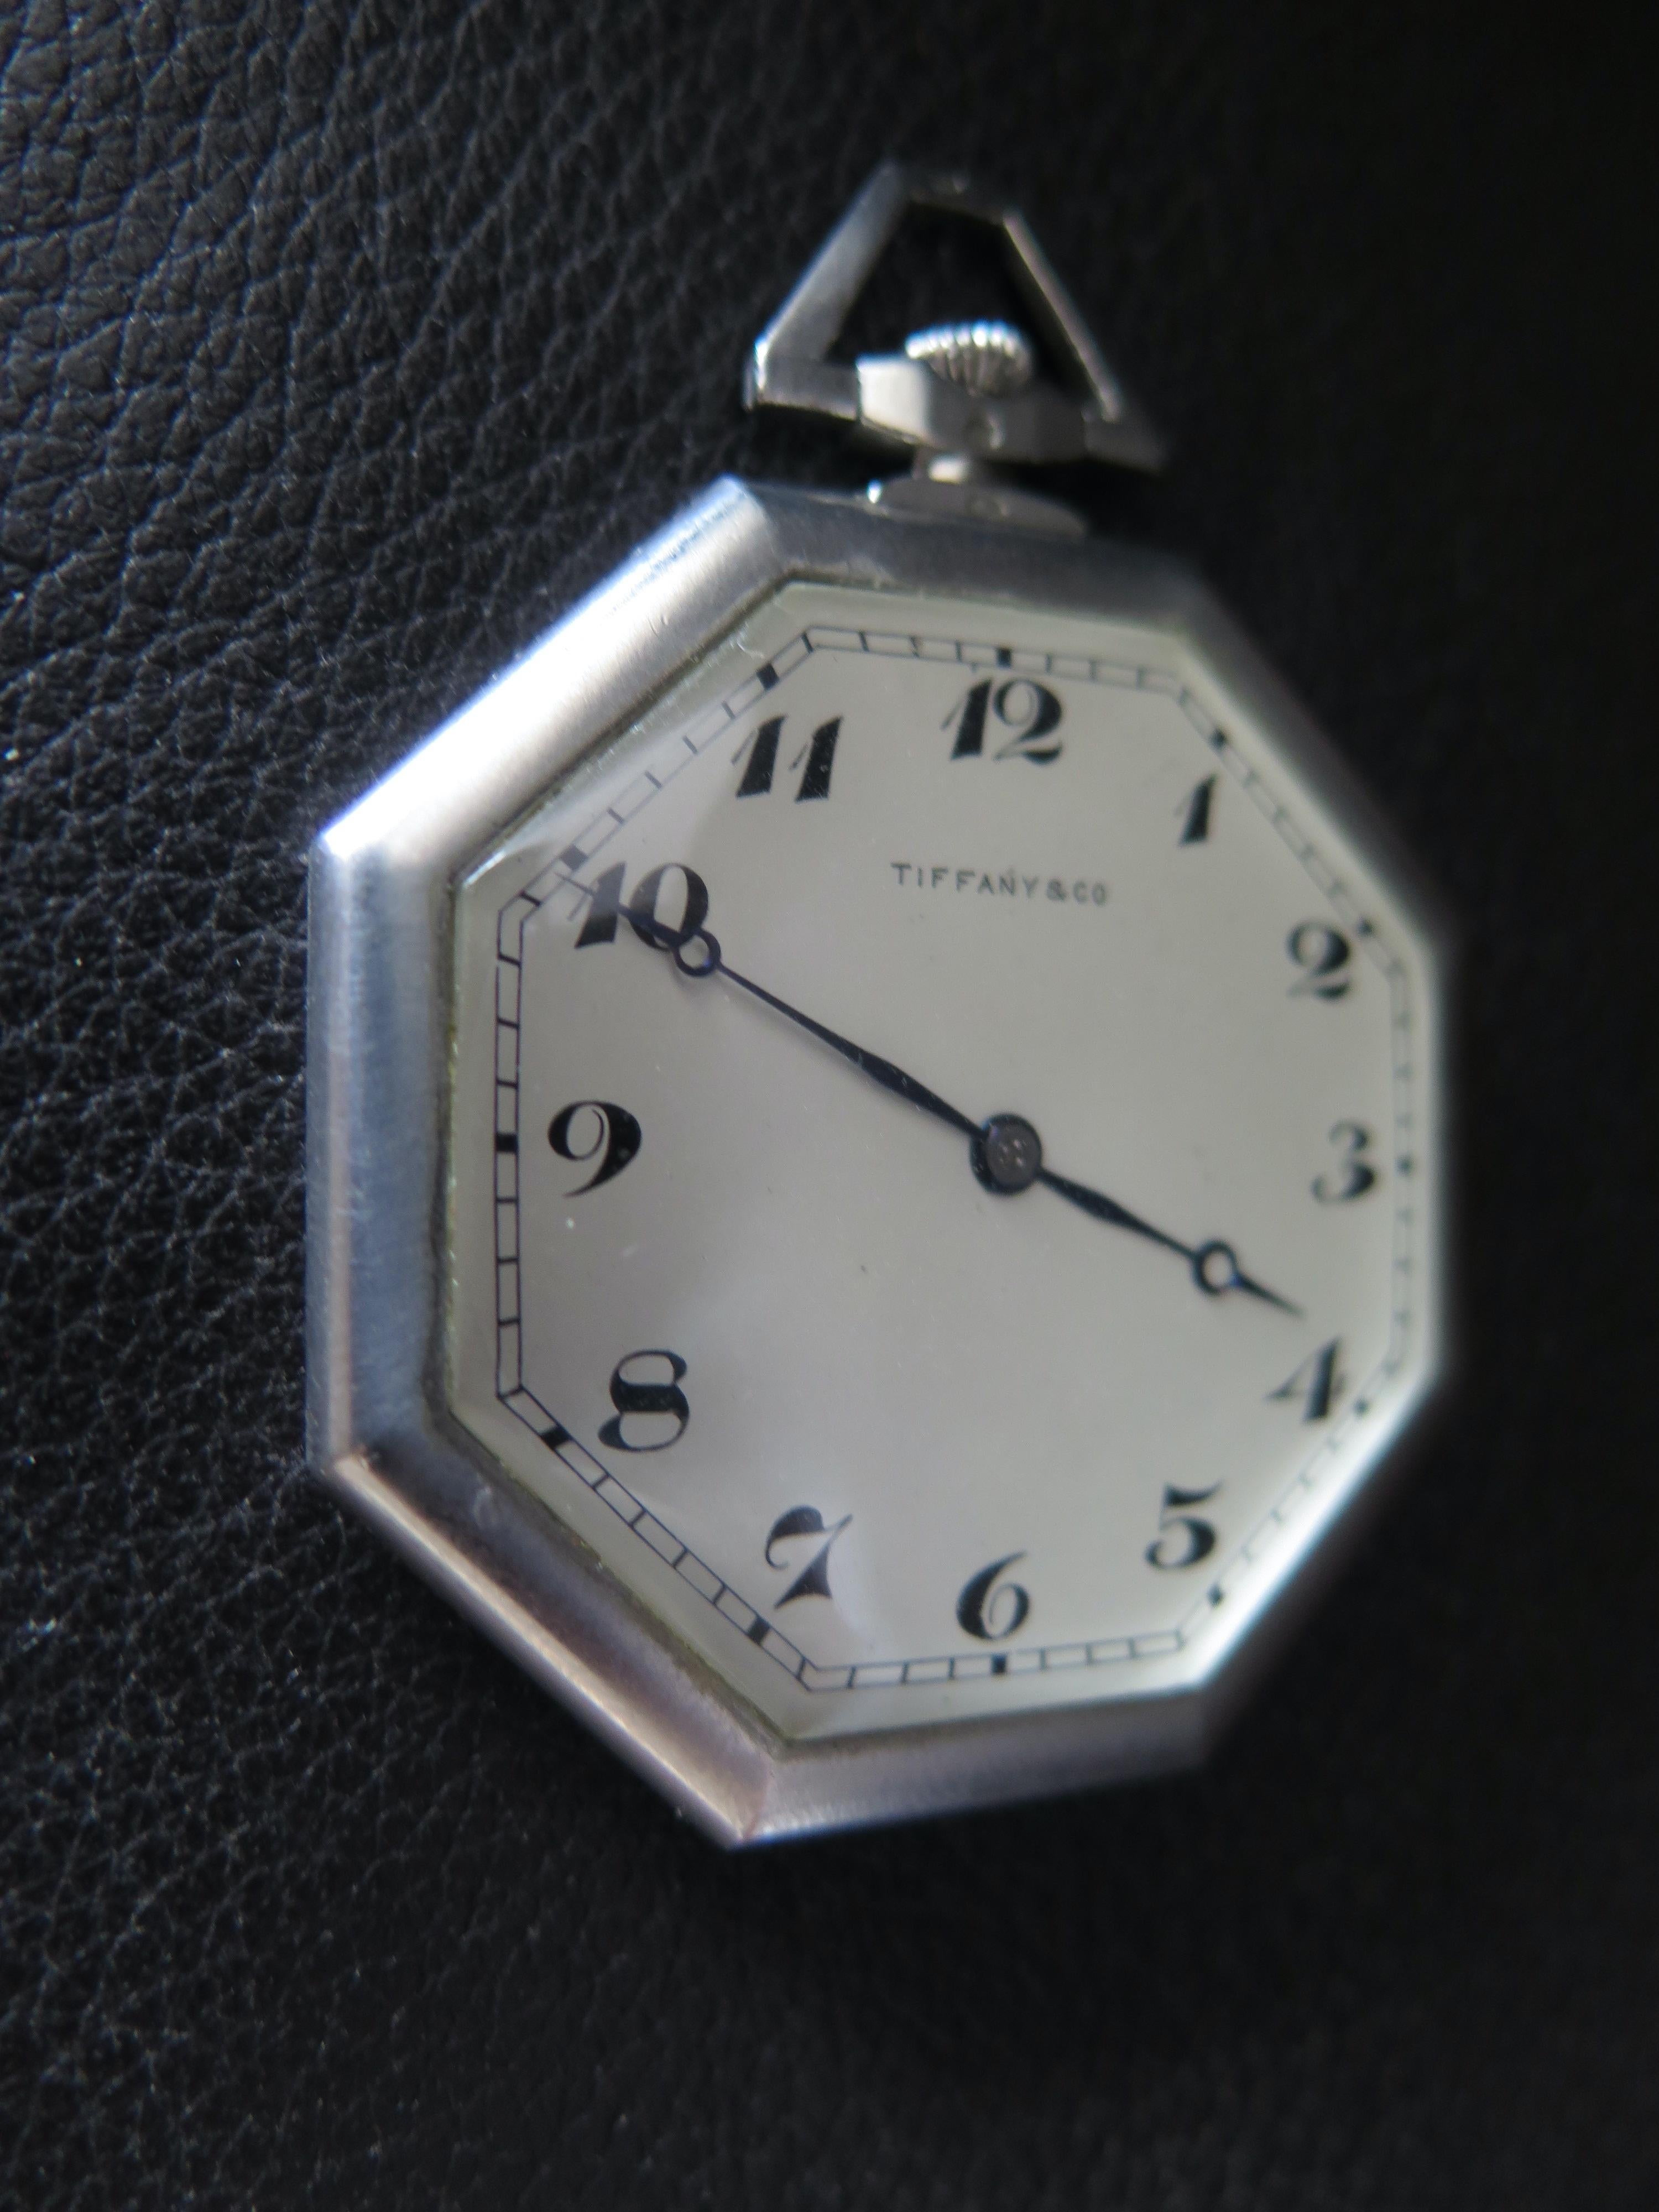 Tiffany Art Deco Pocket Watch By Audemars Piguet In Good Condition For Sale In Saint Petersburg, FL